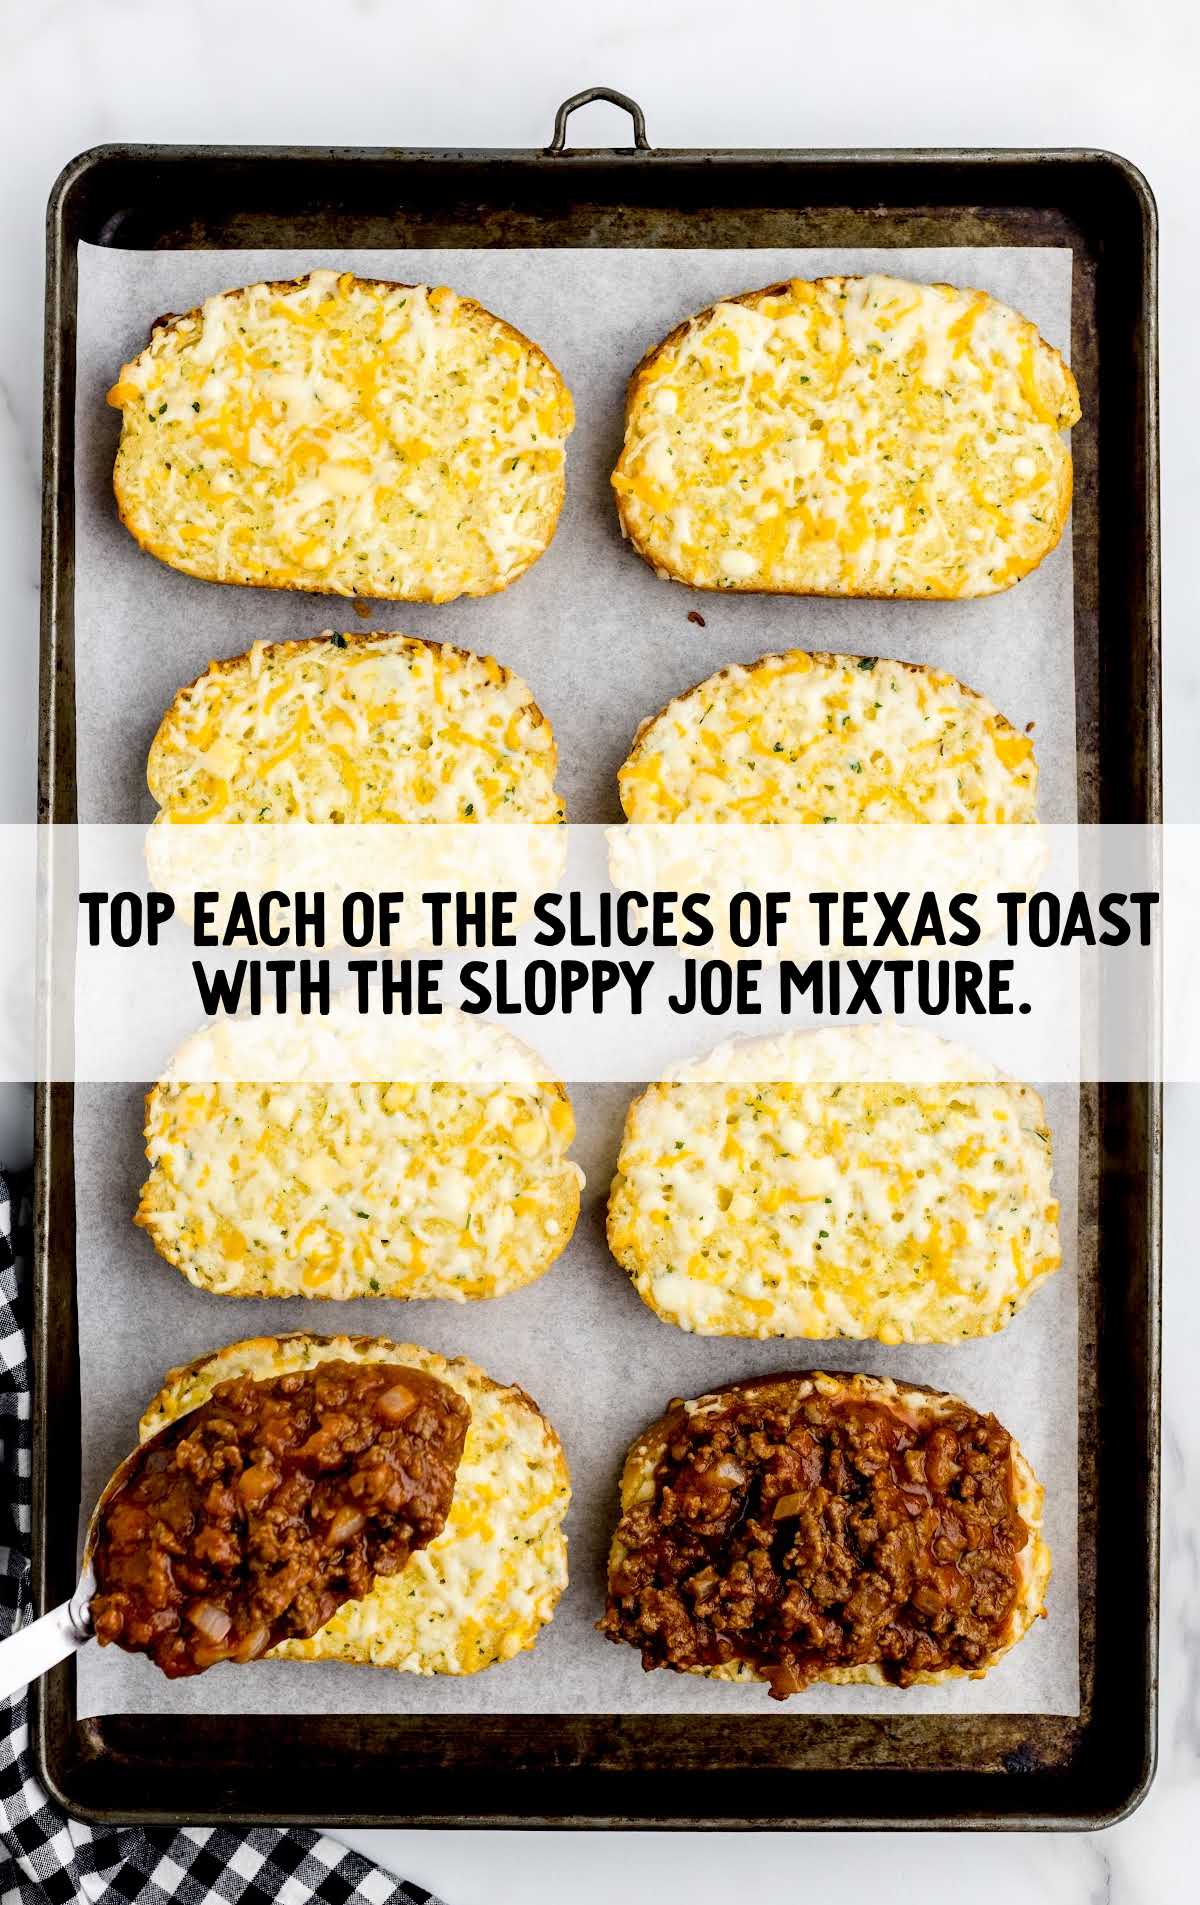 sloppy joe mixture topped on top of each texas toast